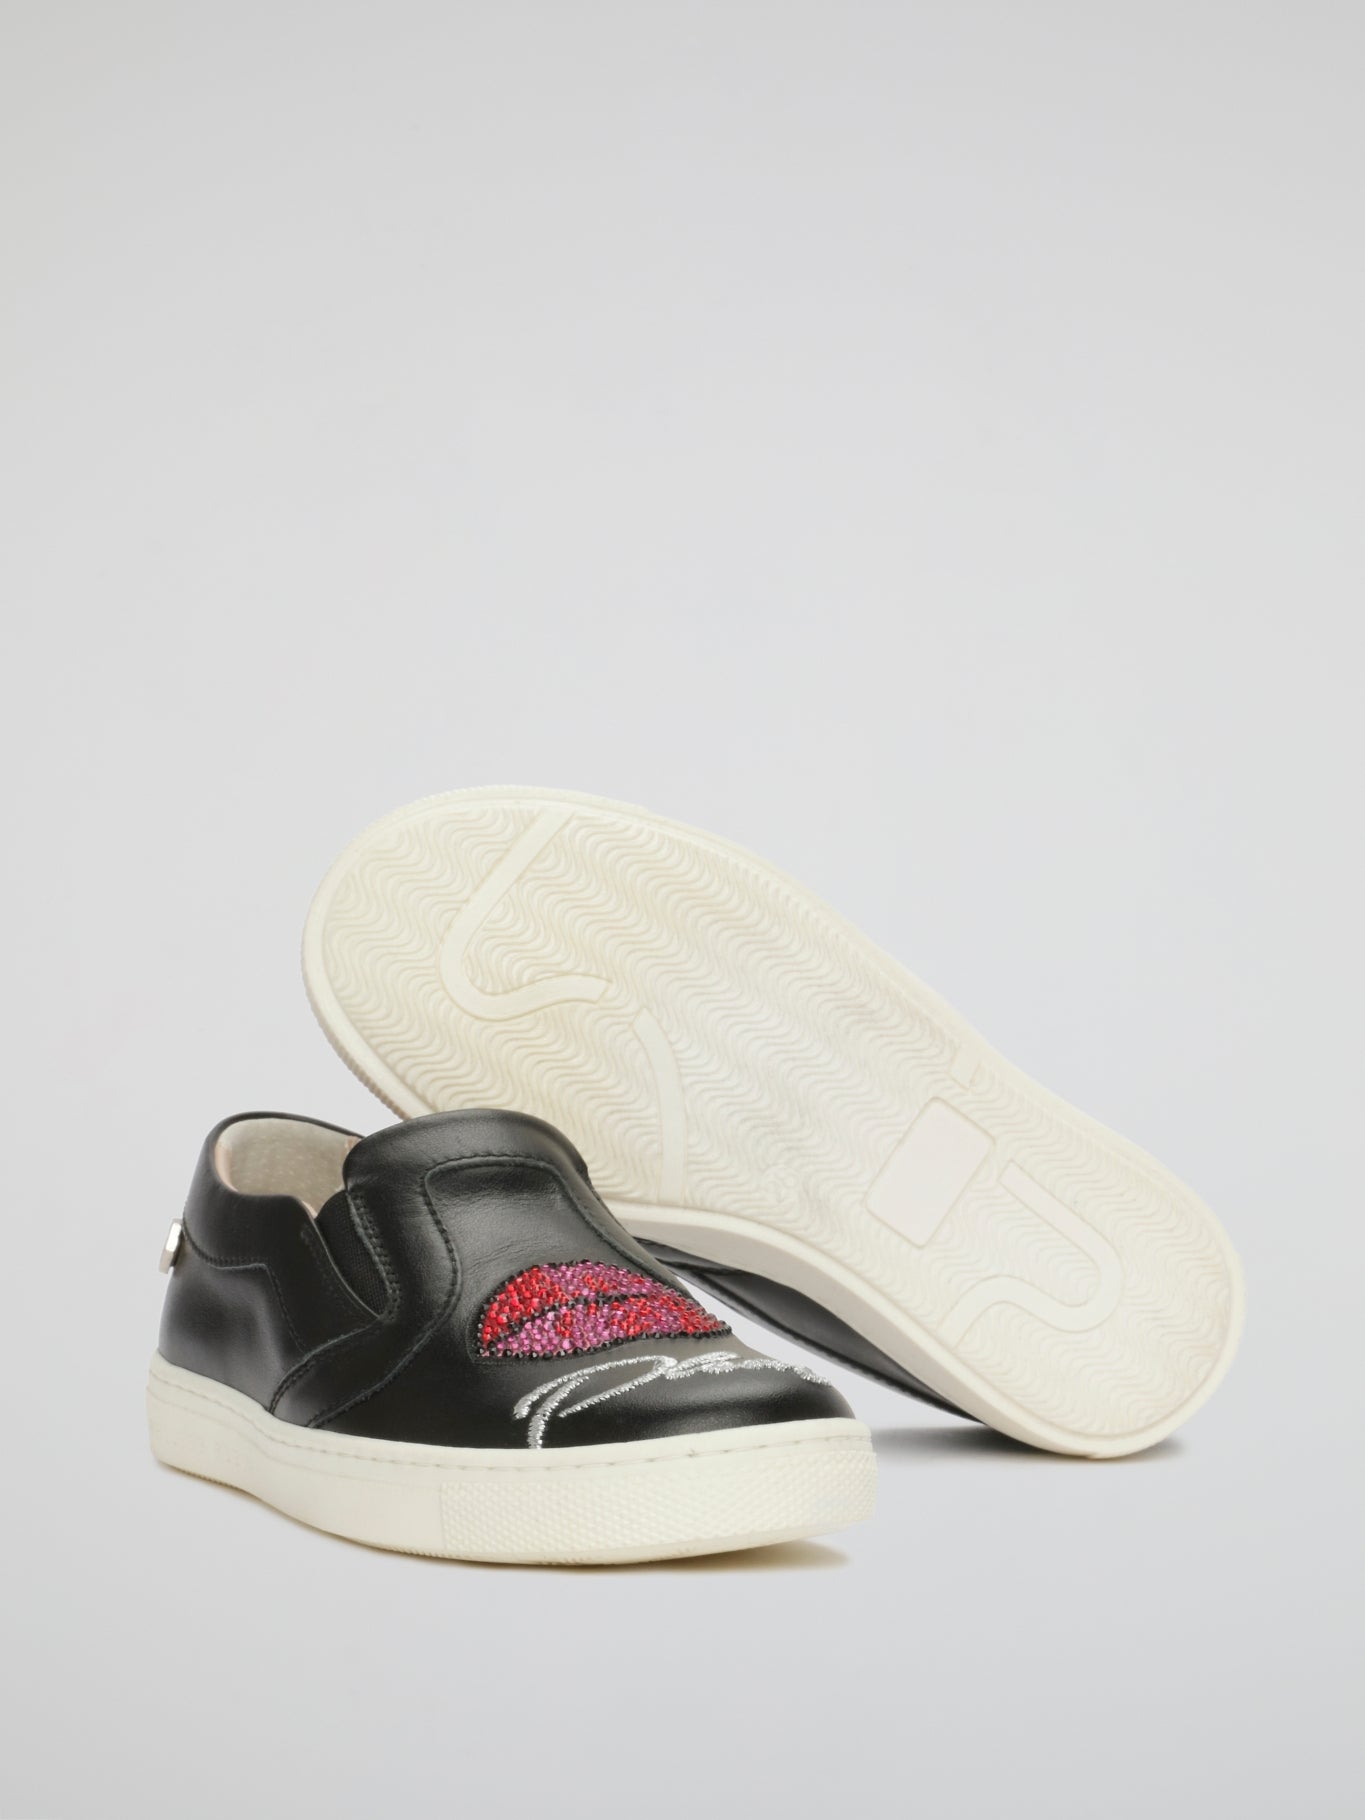 Black Studded Slip-On Sneakers (Kids)